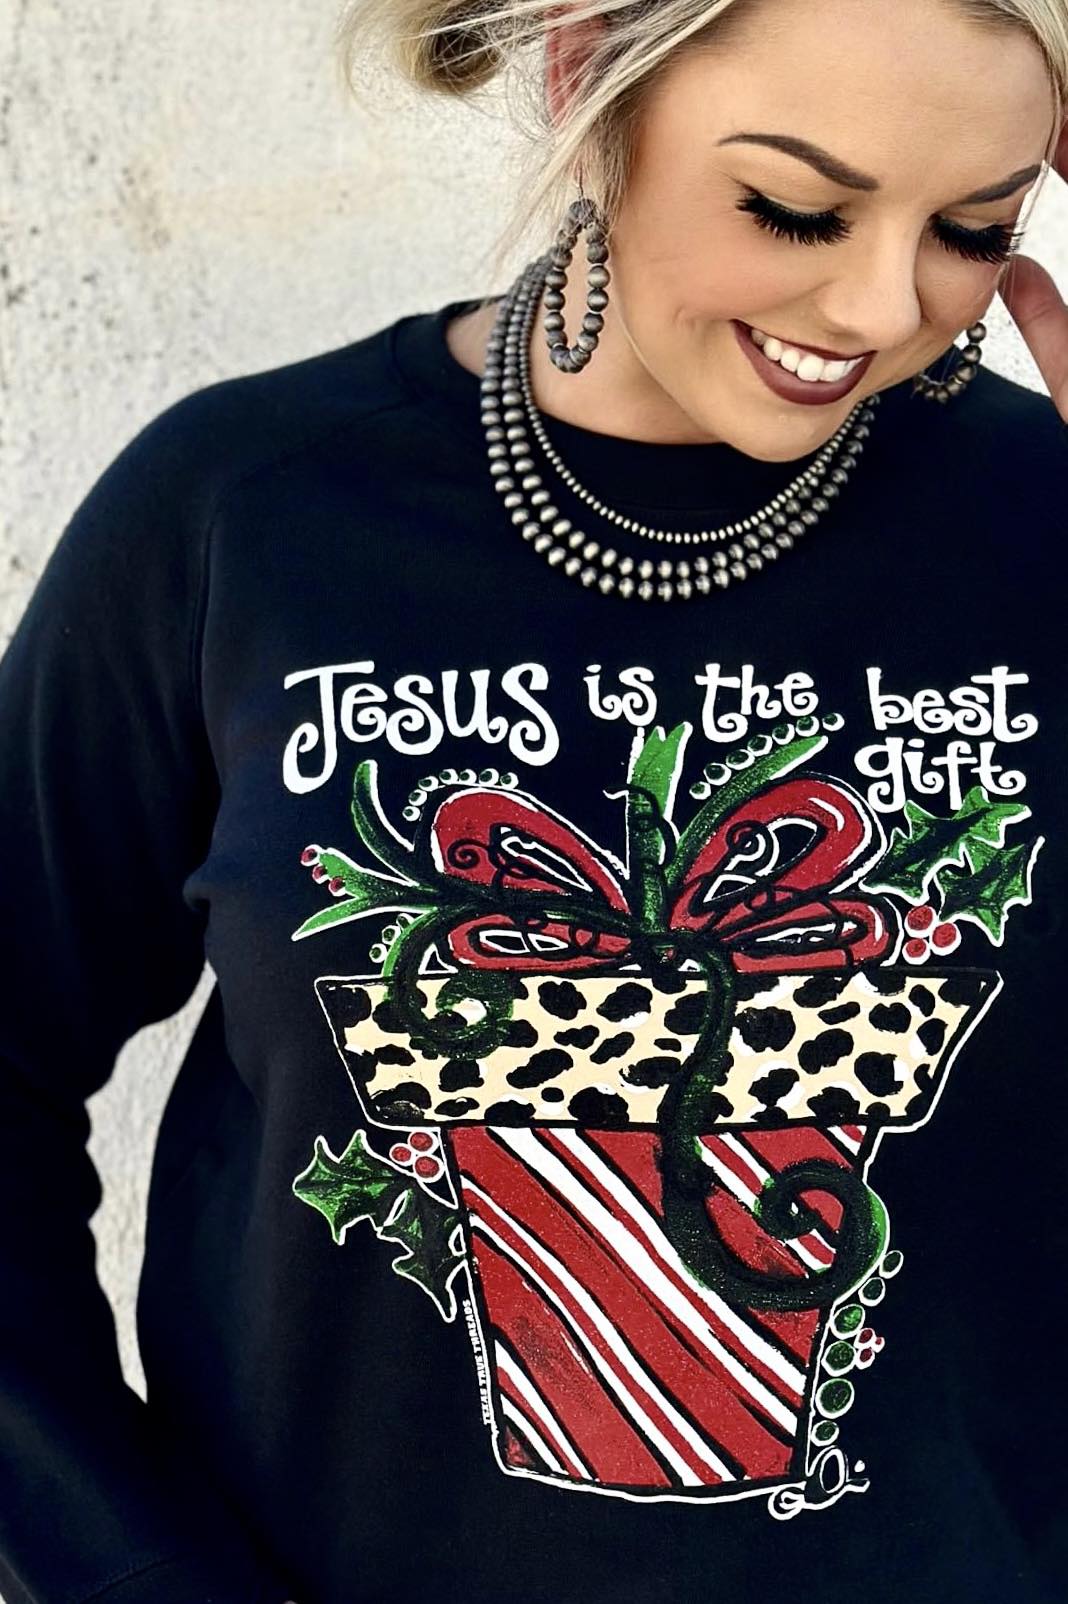 [Jesus is the Best Gift] Long Sleeve Tee Shirt